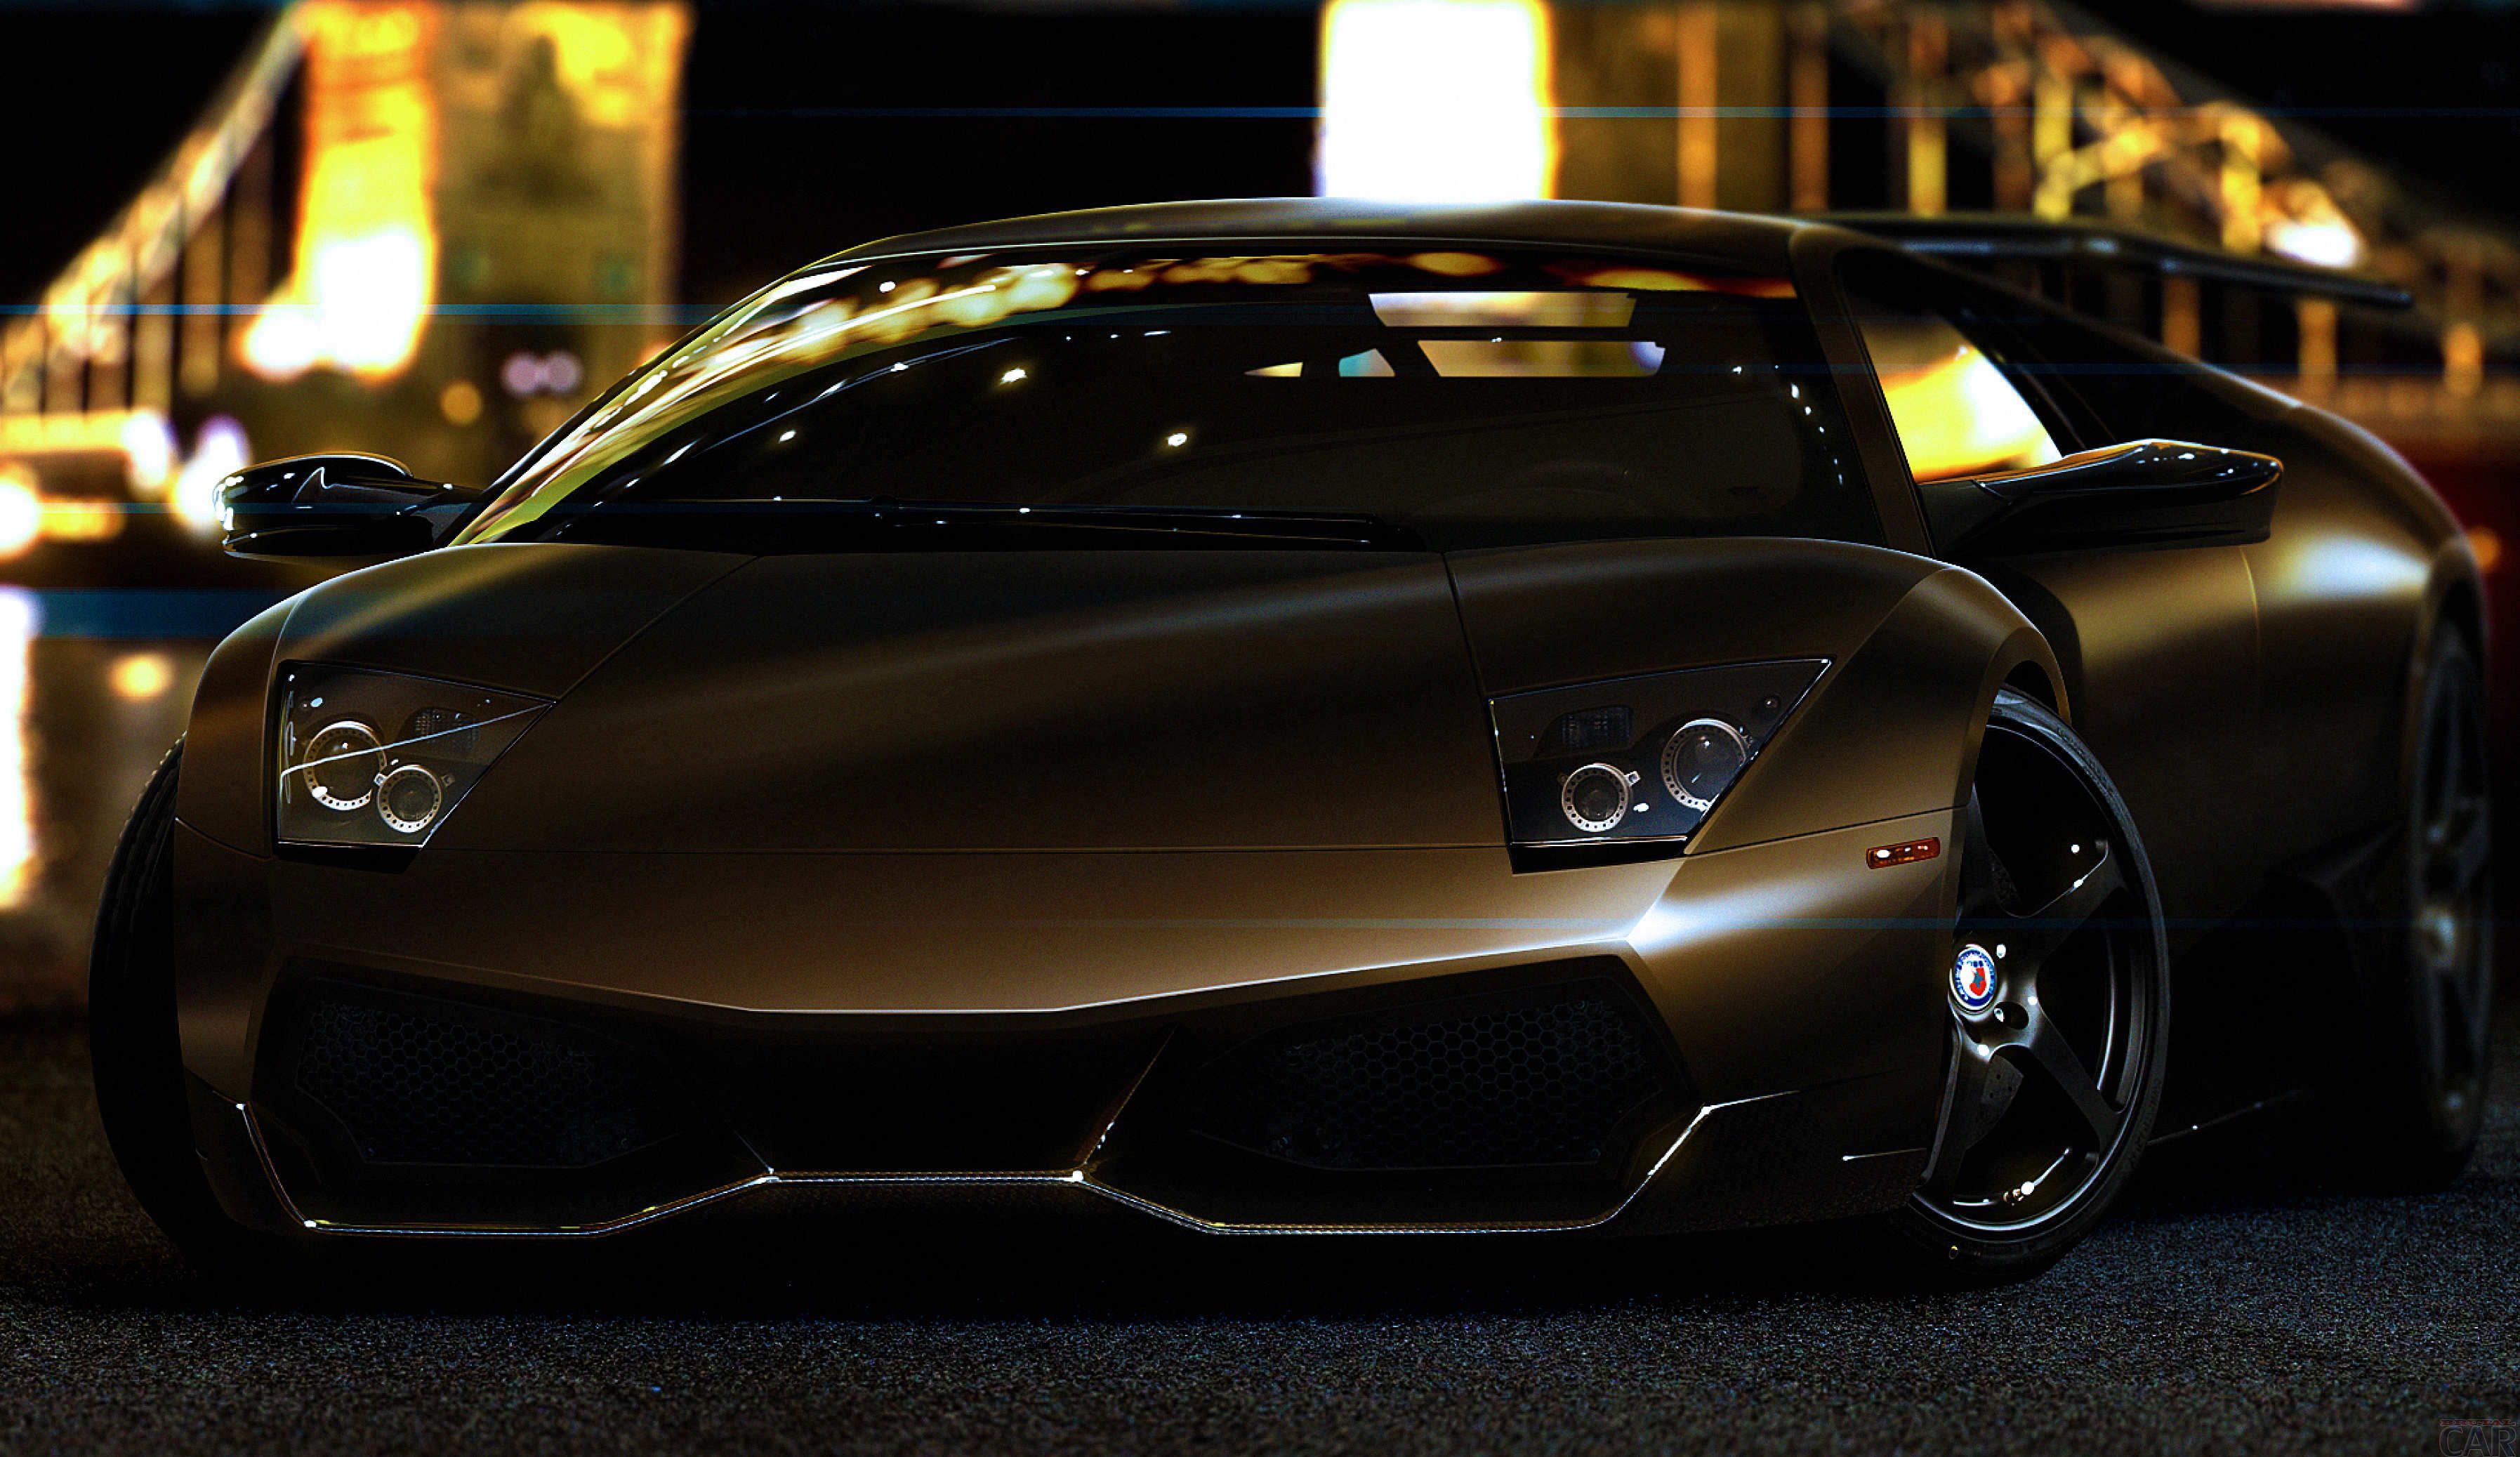 Descarga gratuita de fondos de pantalla de coches Lamborghini. Lamborghini Murcielago